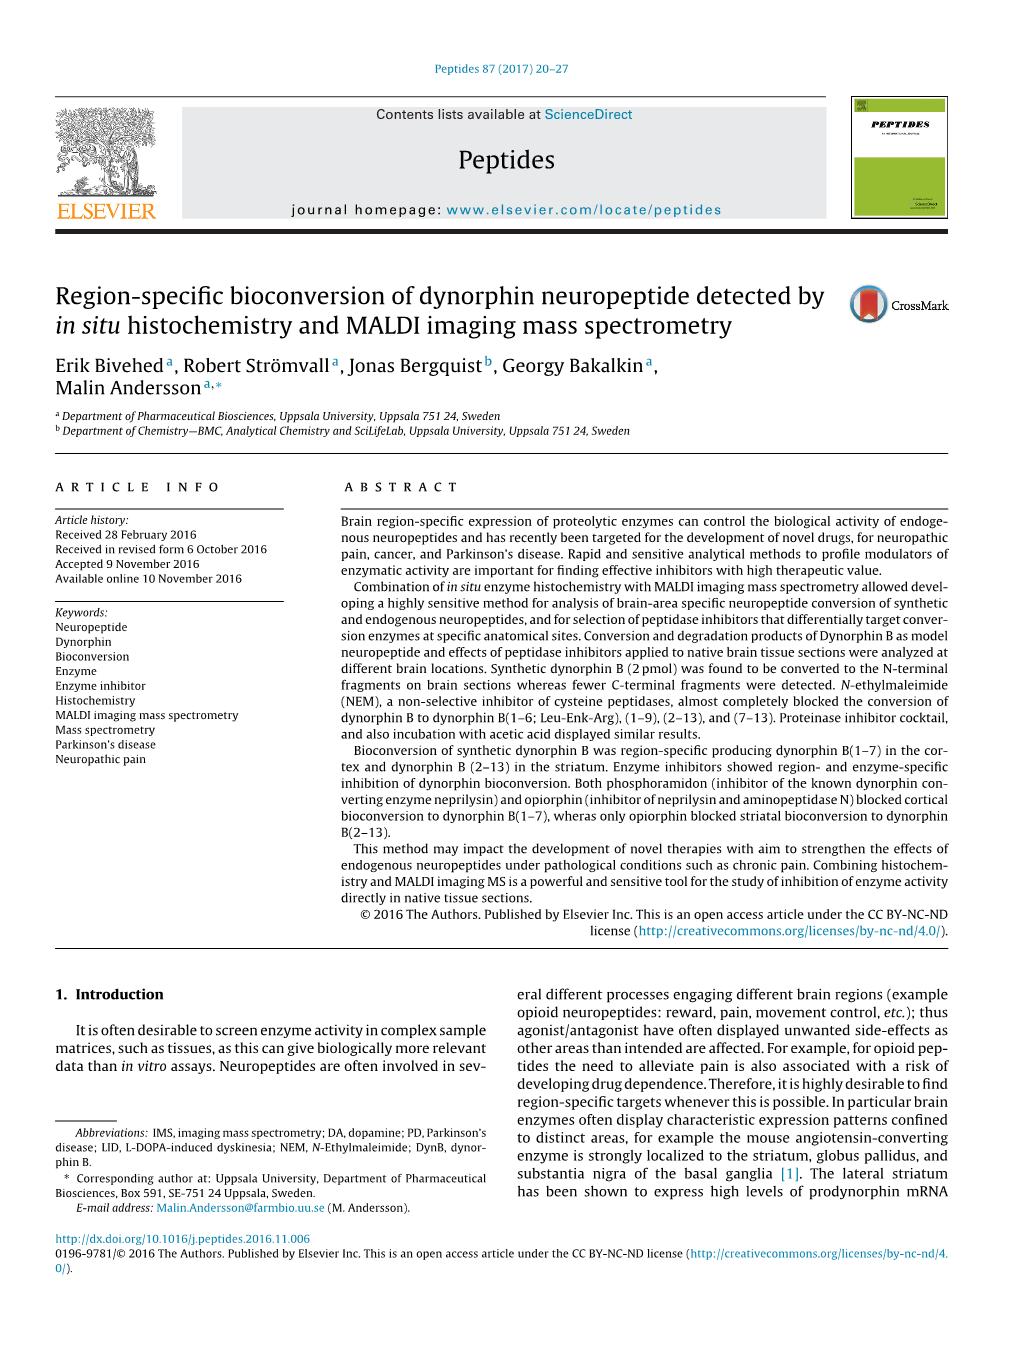 Region-Specific Bioconversion of Dynorphin Neuropeptide Detected